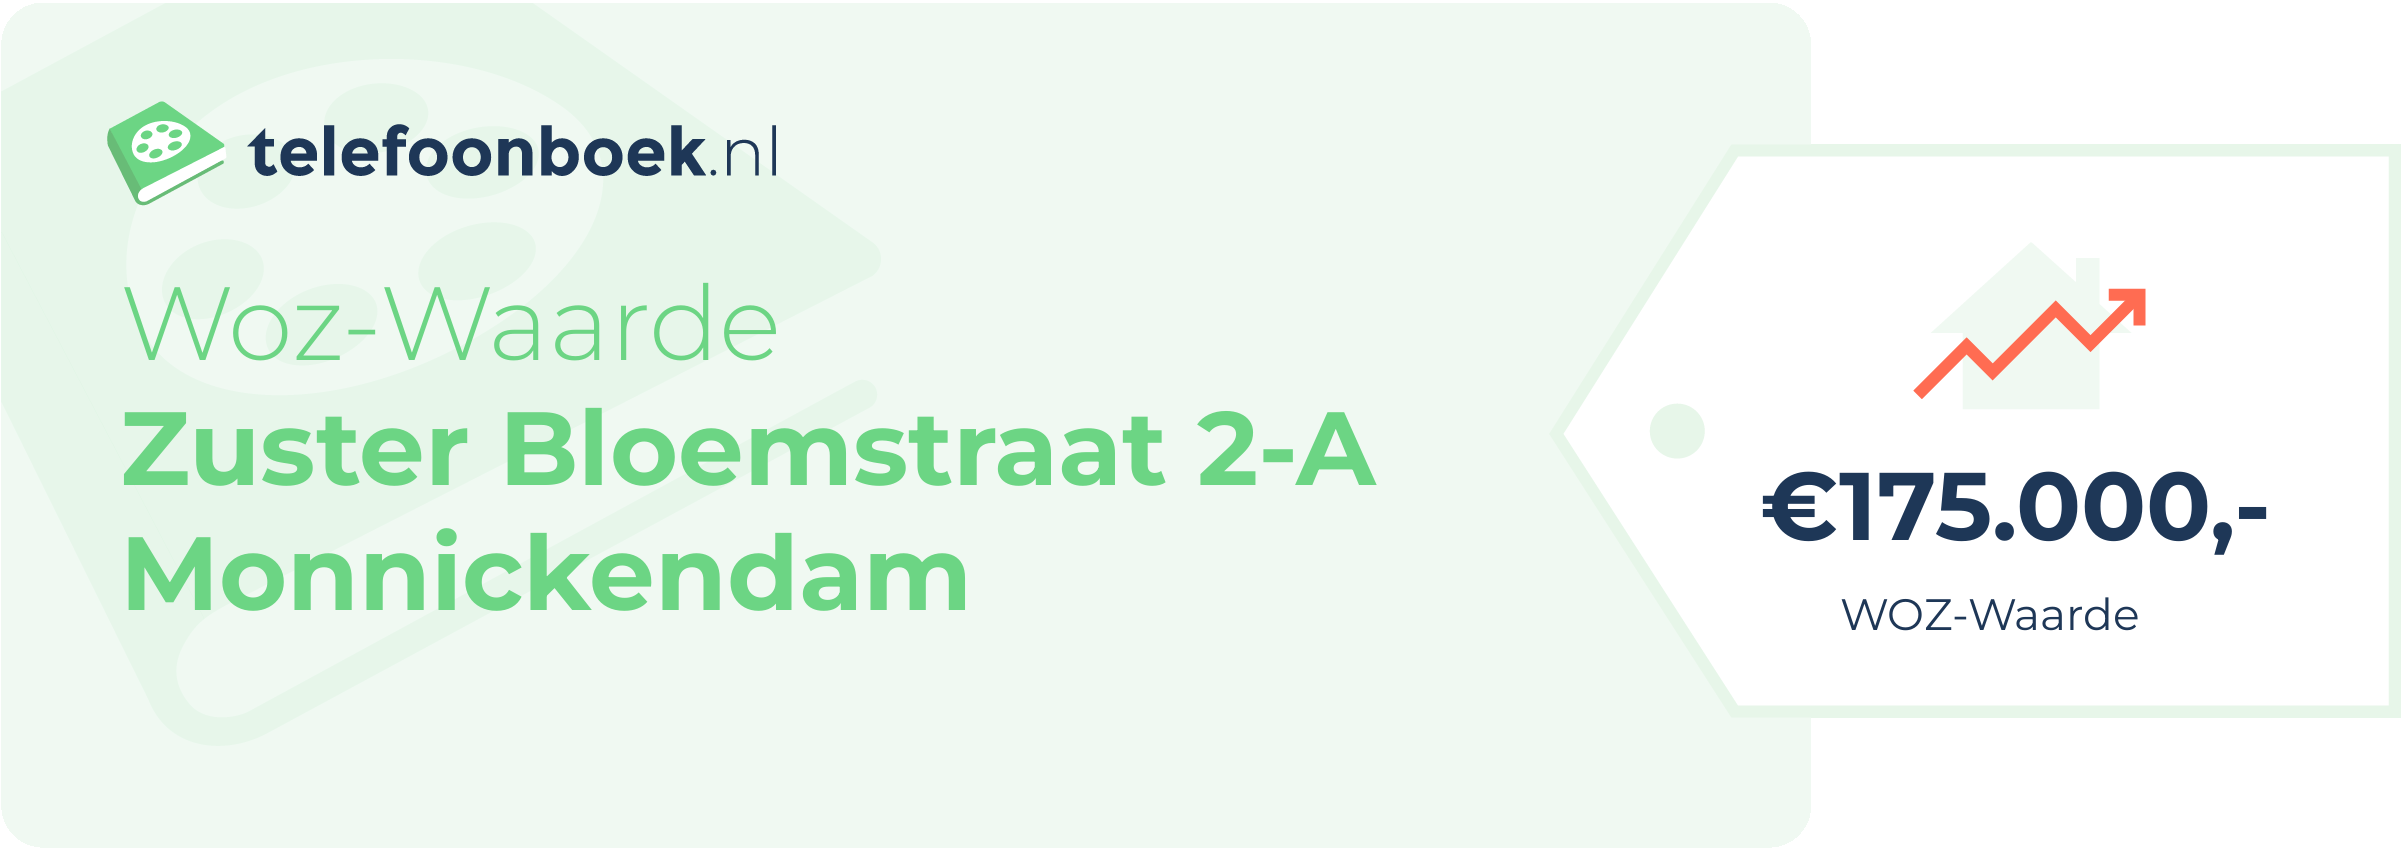 WOZ-waarde Zuster Bloemstraat 2-A Monnickendam